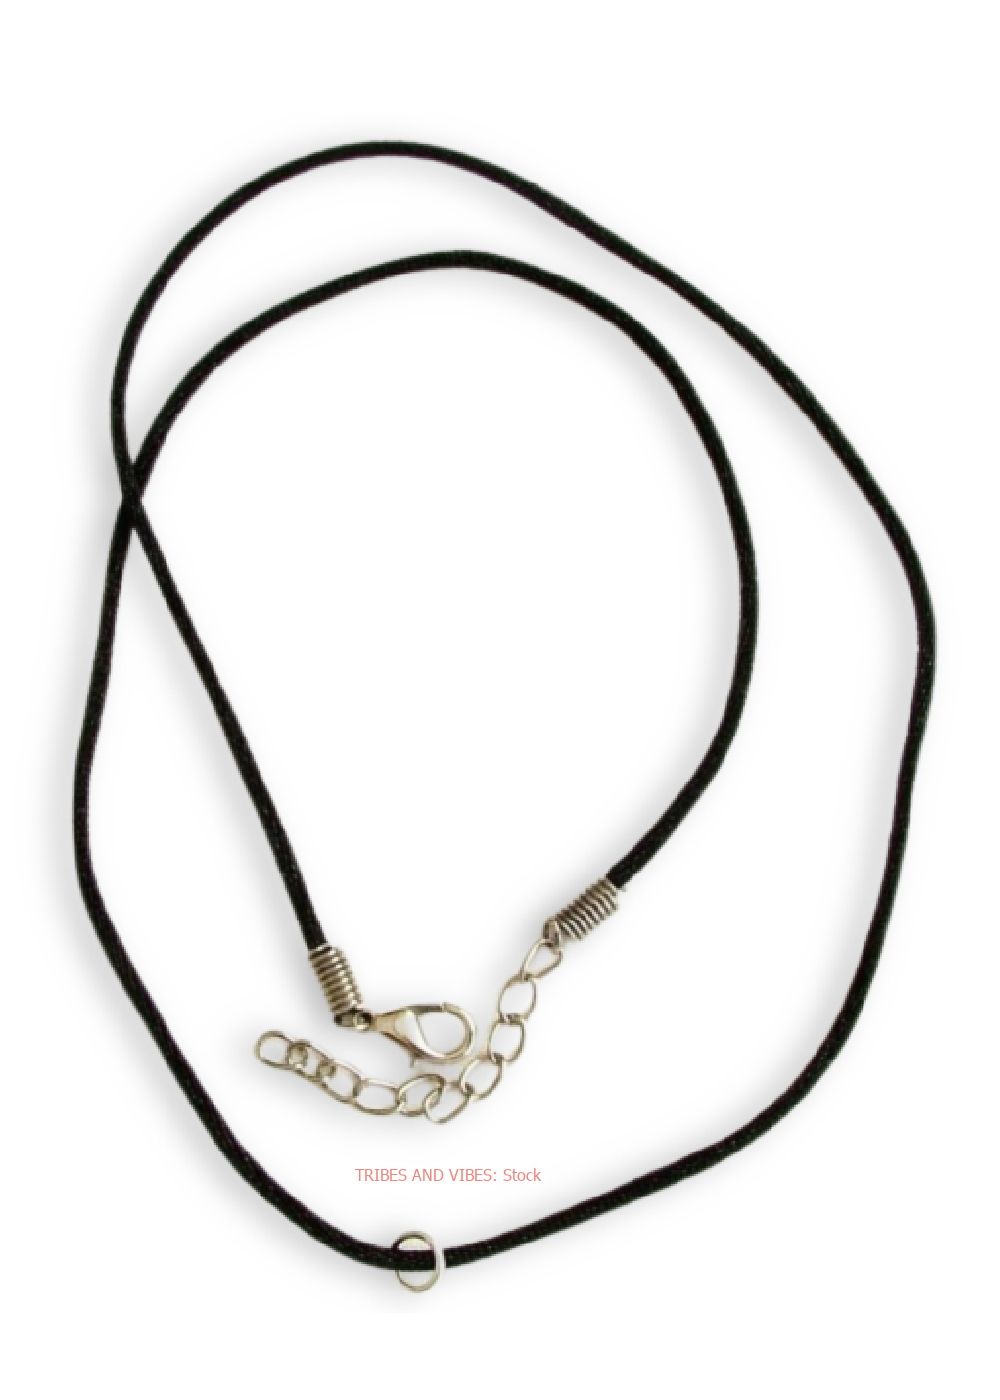 Black synthetic Necklace 51cm-56cm 20-22